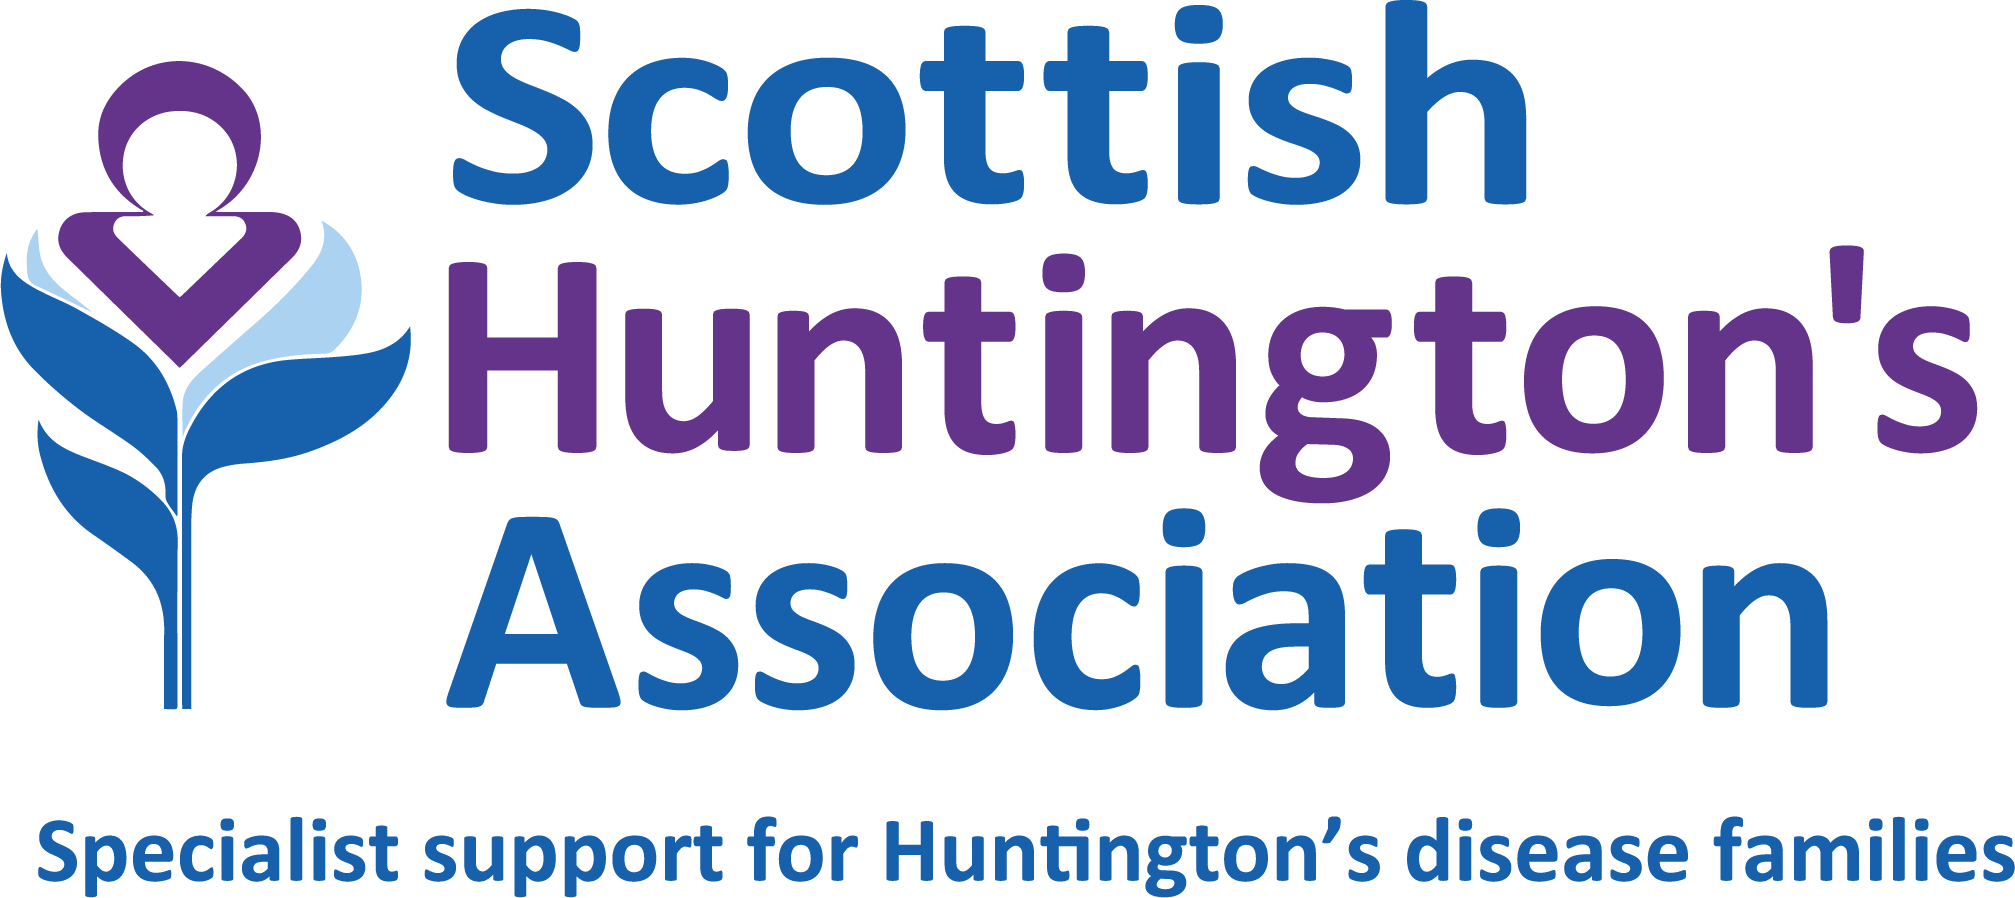 Scottish Huntington's Association logo